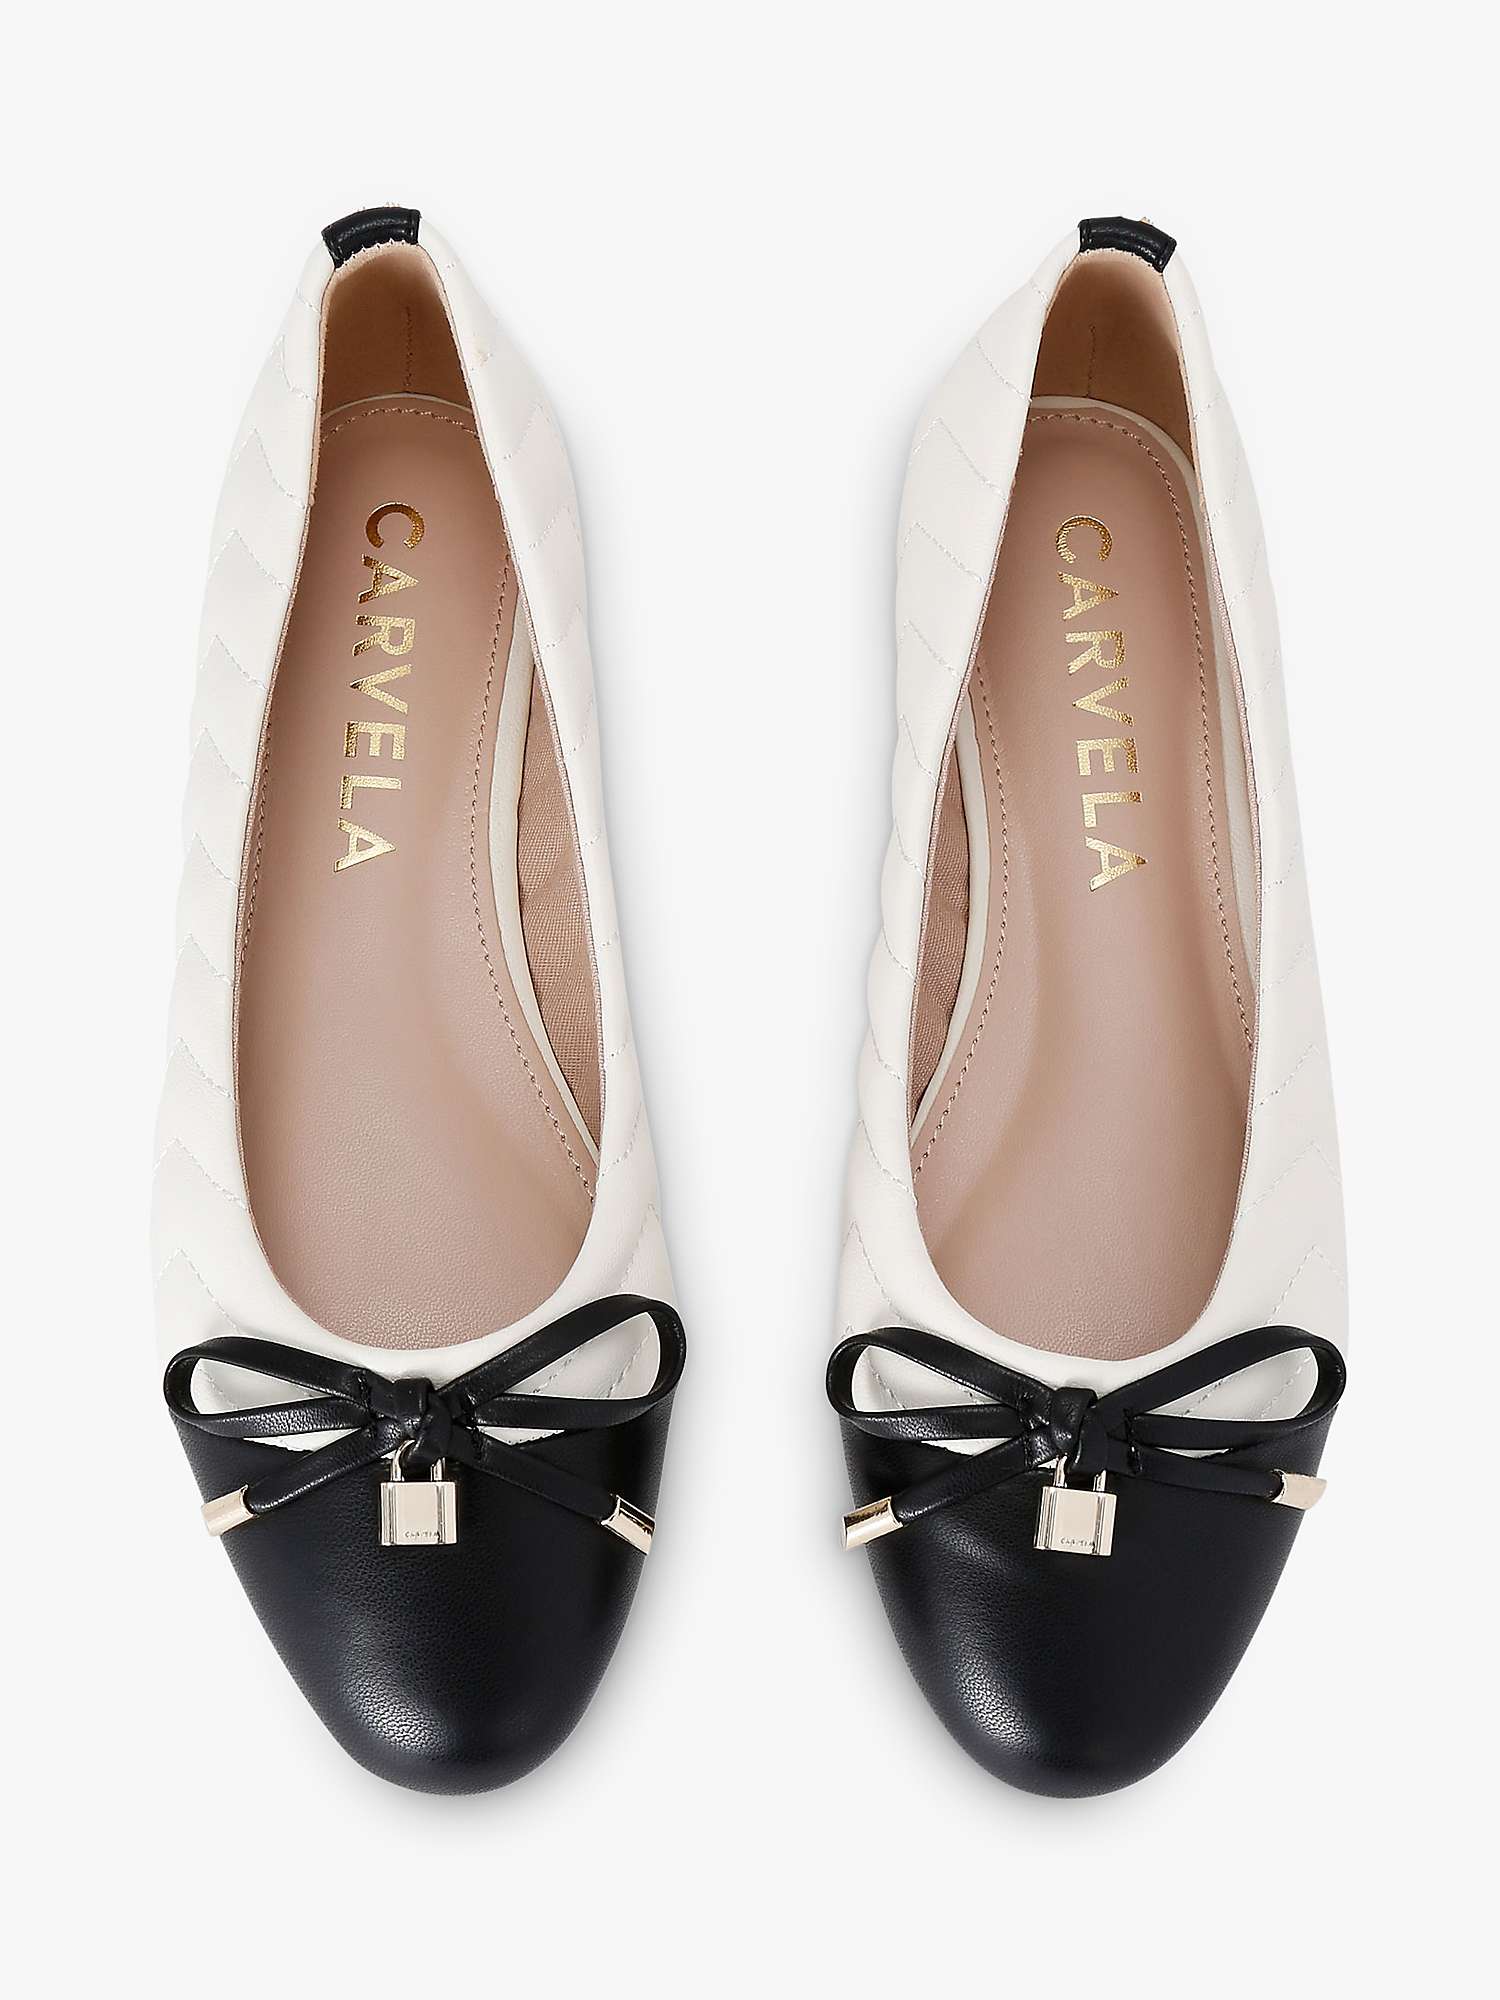 Buy Carvela Lara Ballerina Shoes, White/Black Online at johnlewis.com